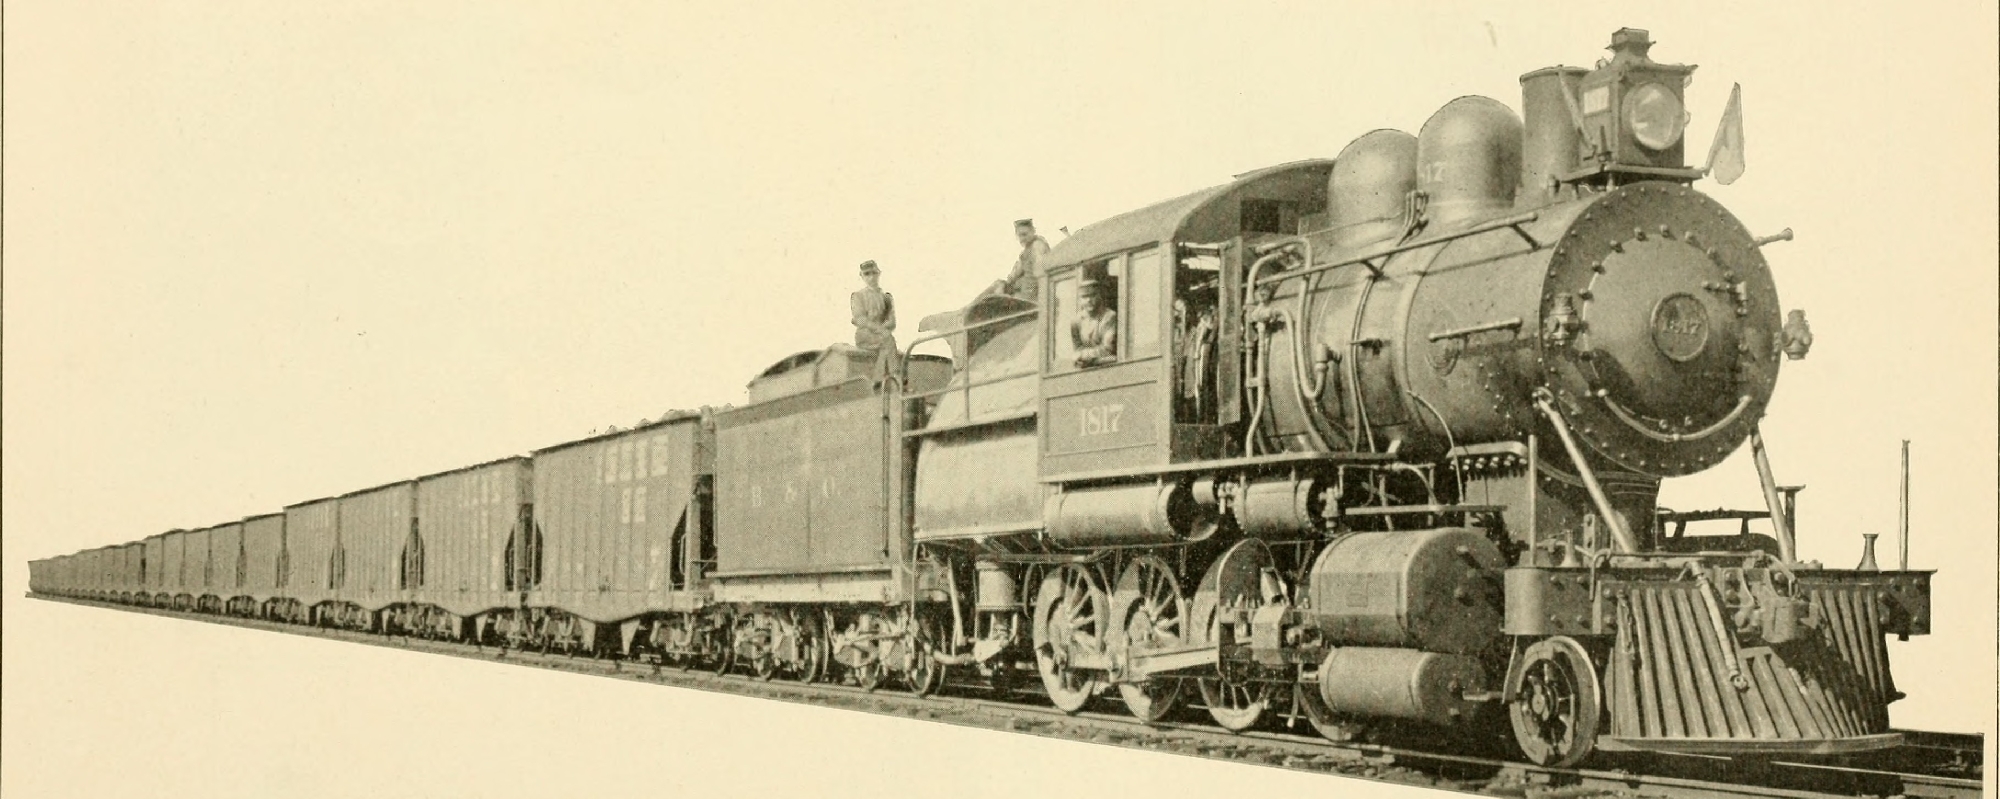 Baltimore & Ohio class E19a with a coal train